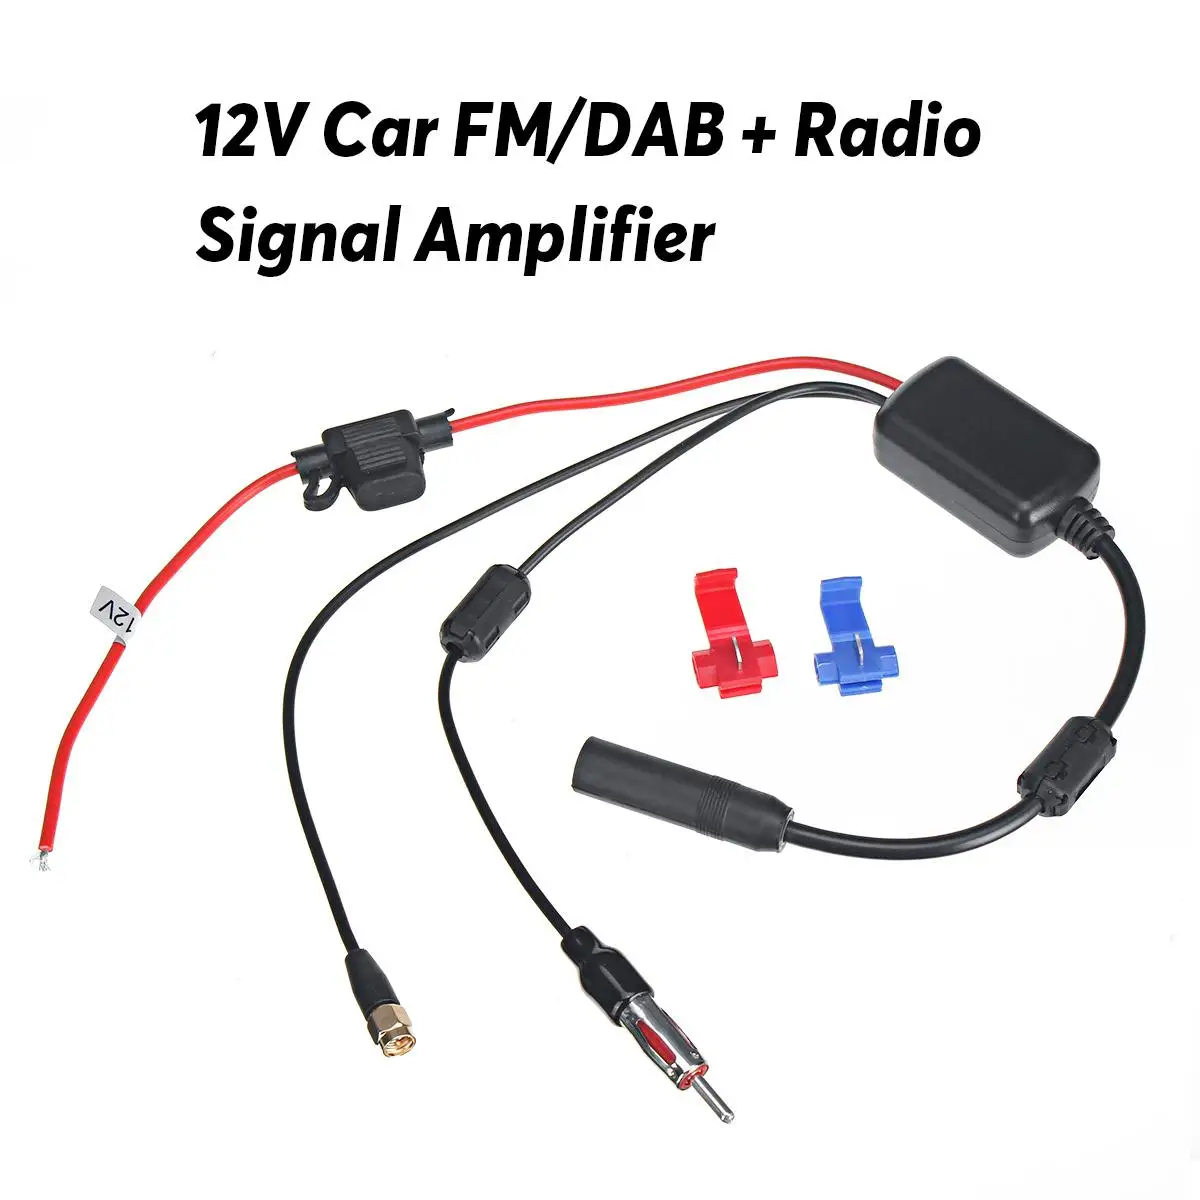 

Universal DAB+ FM Car Antenna Aerial Splitter Cable Digital Radio Signal Amplifier Antenna Signal Booster 88-108MHz